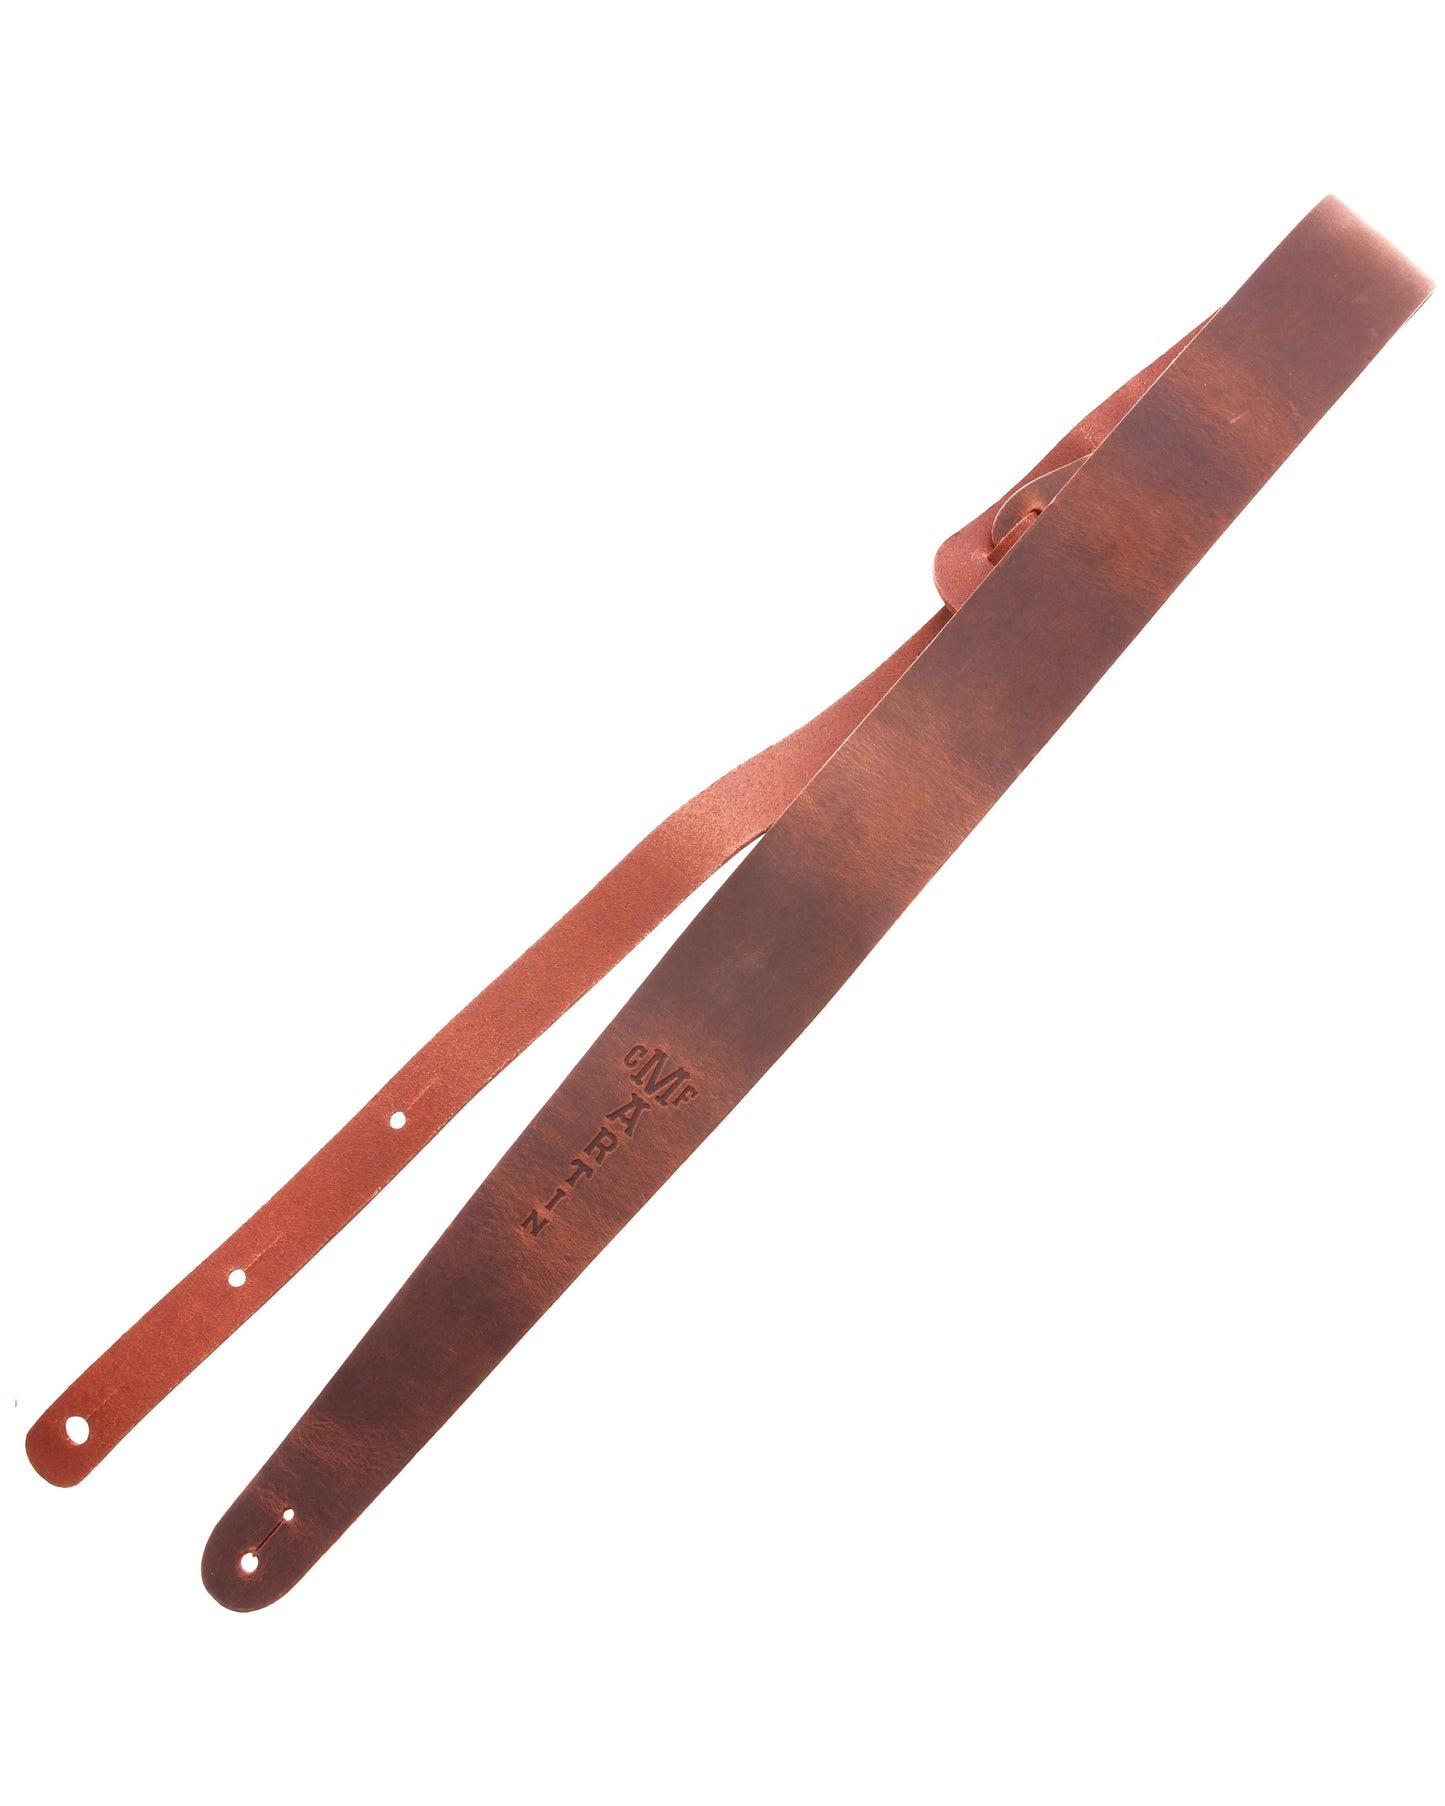 Image 1 of Martin Vintage Leather Guitar Strap, Brown - SKU# MVLS-BRN : Product Type Accessories & Parts : Elderly Instruments